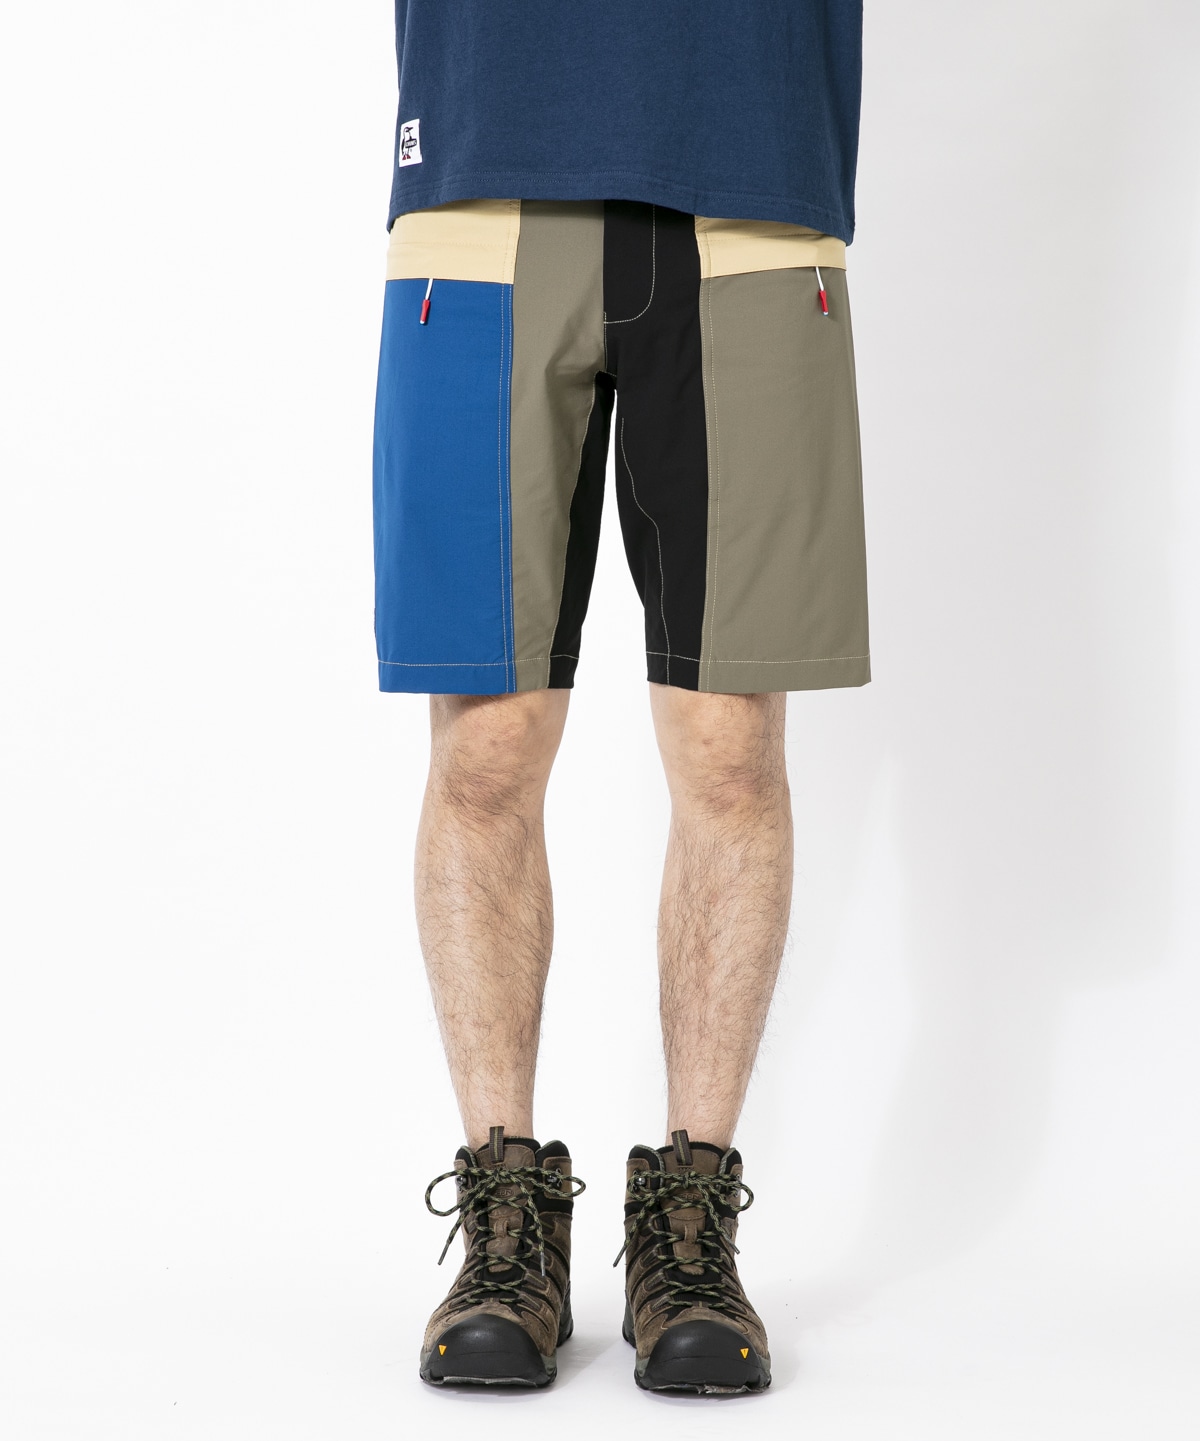 Trekking Shorts トレッキングショーツ ショート ハーフパンツ M Sand パンツ オールインワン Chums チャムス アウトドアファッション公式通販